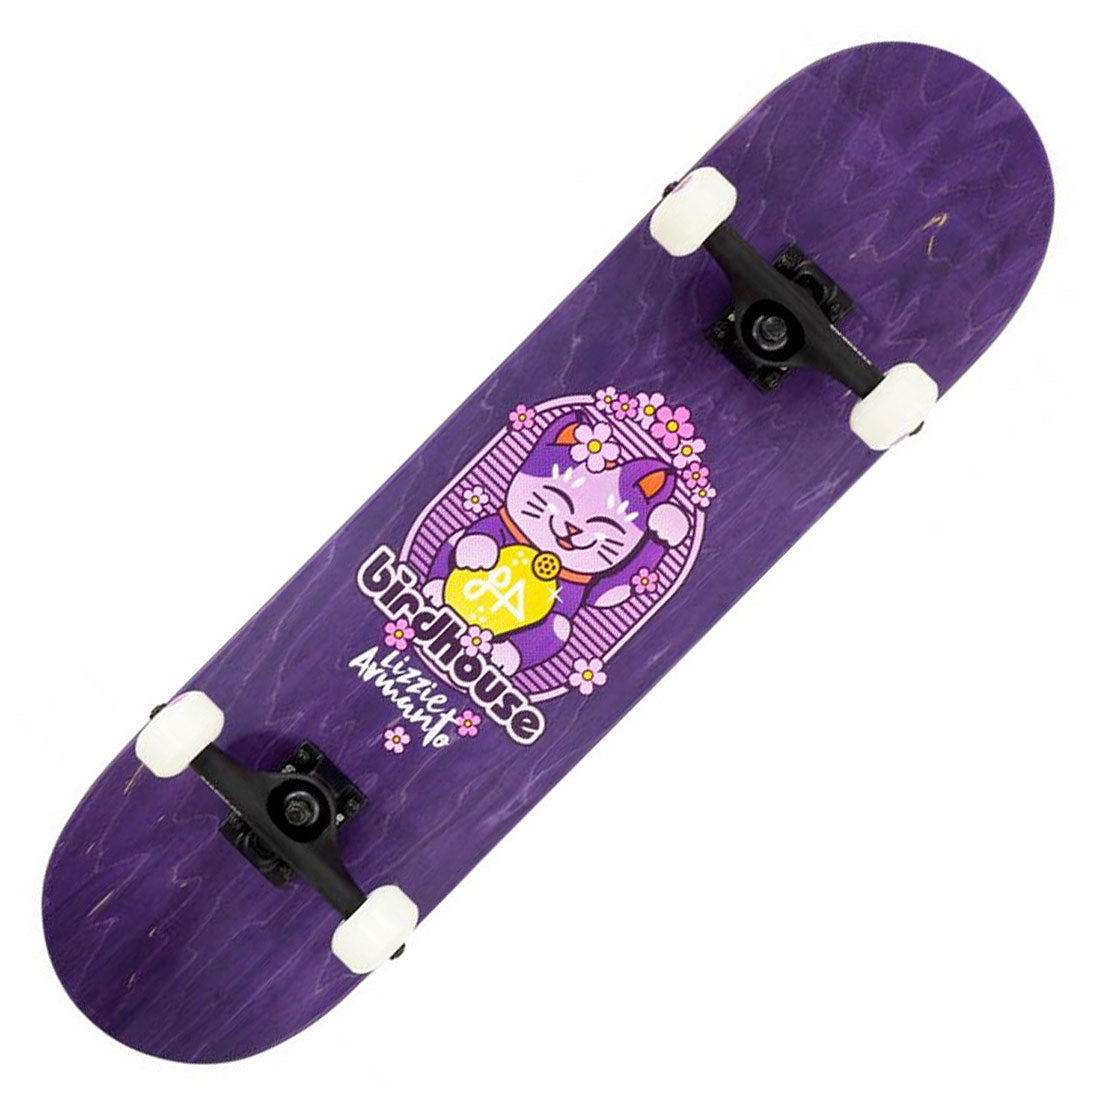 Birdhouse LV3 Maneki Neko 8.25 Complete - Purple Skateboard Completes Modern Street